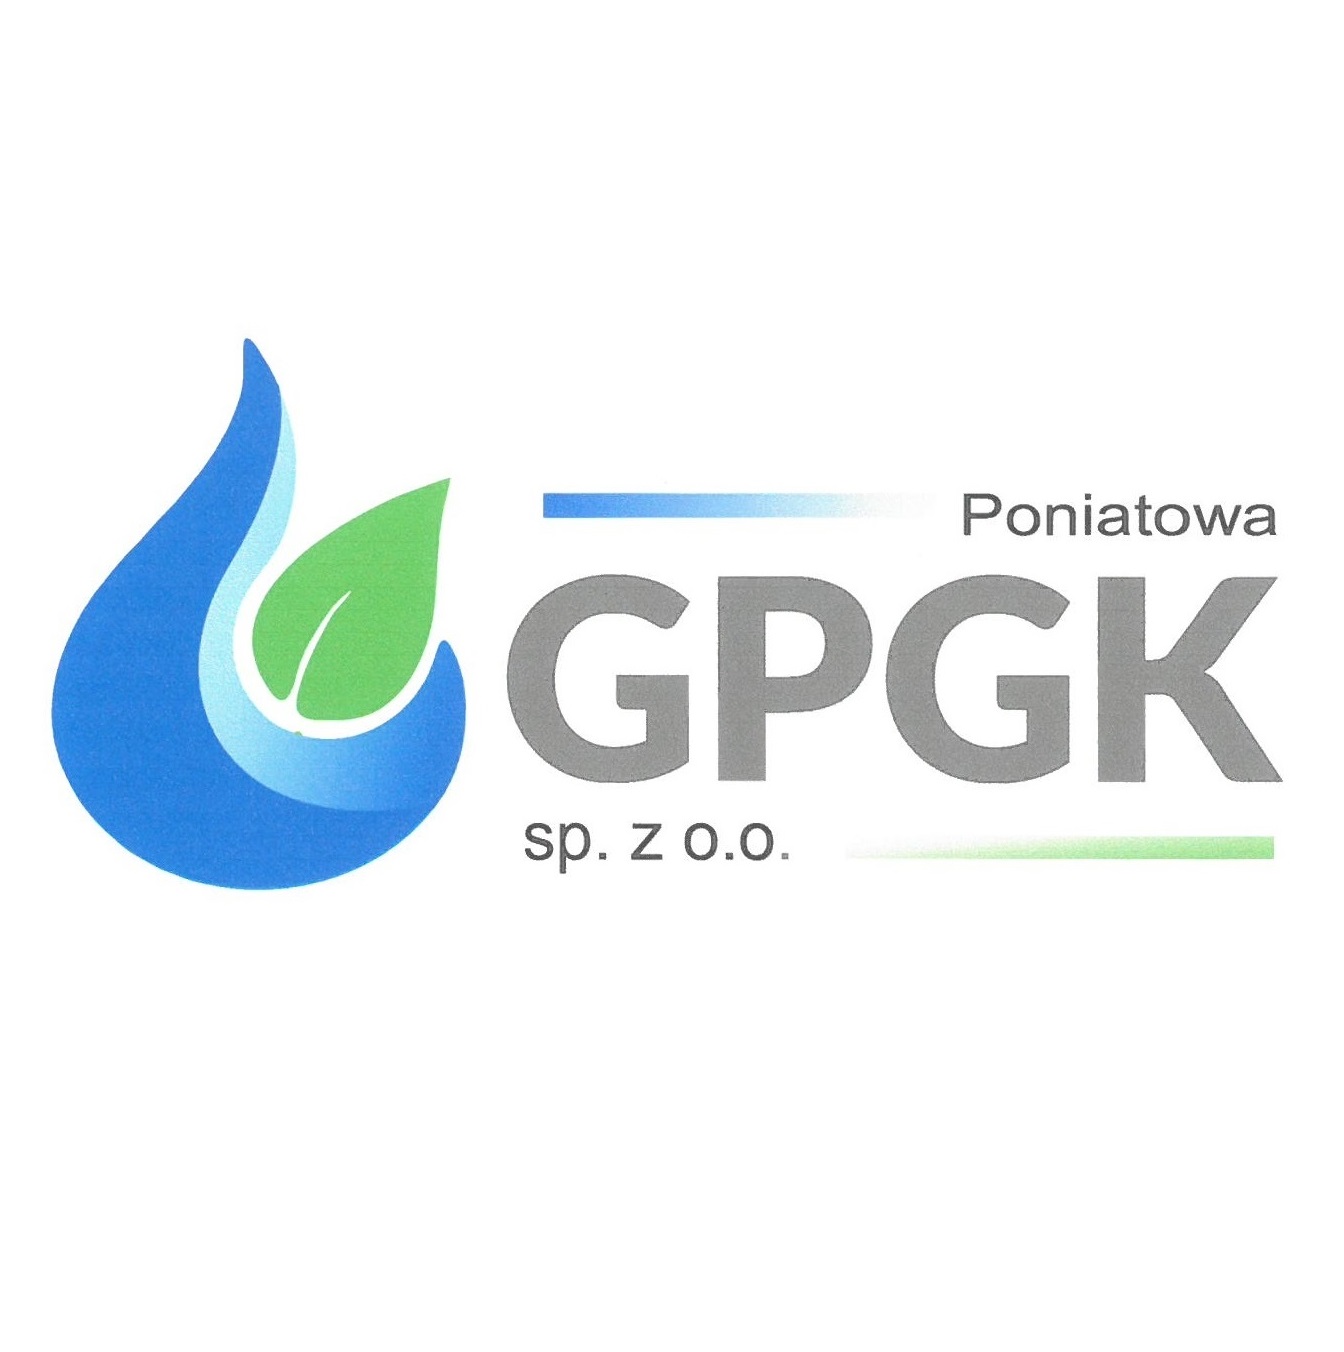 Rozstrzygnięty konkurs na logo GPGK Spółka z o.o.